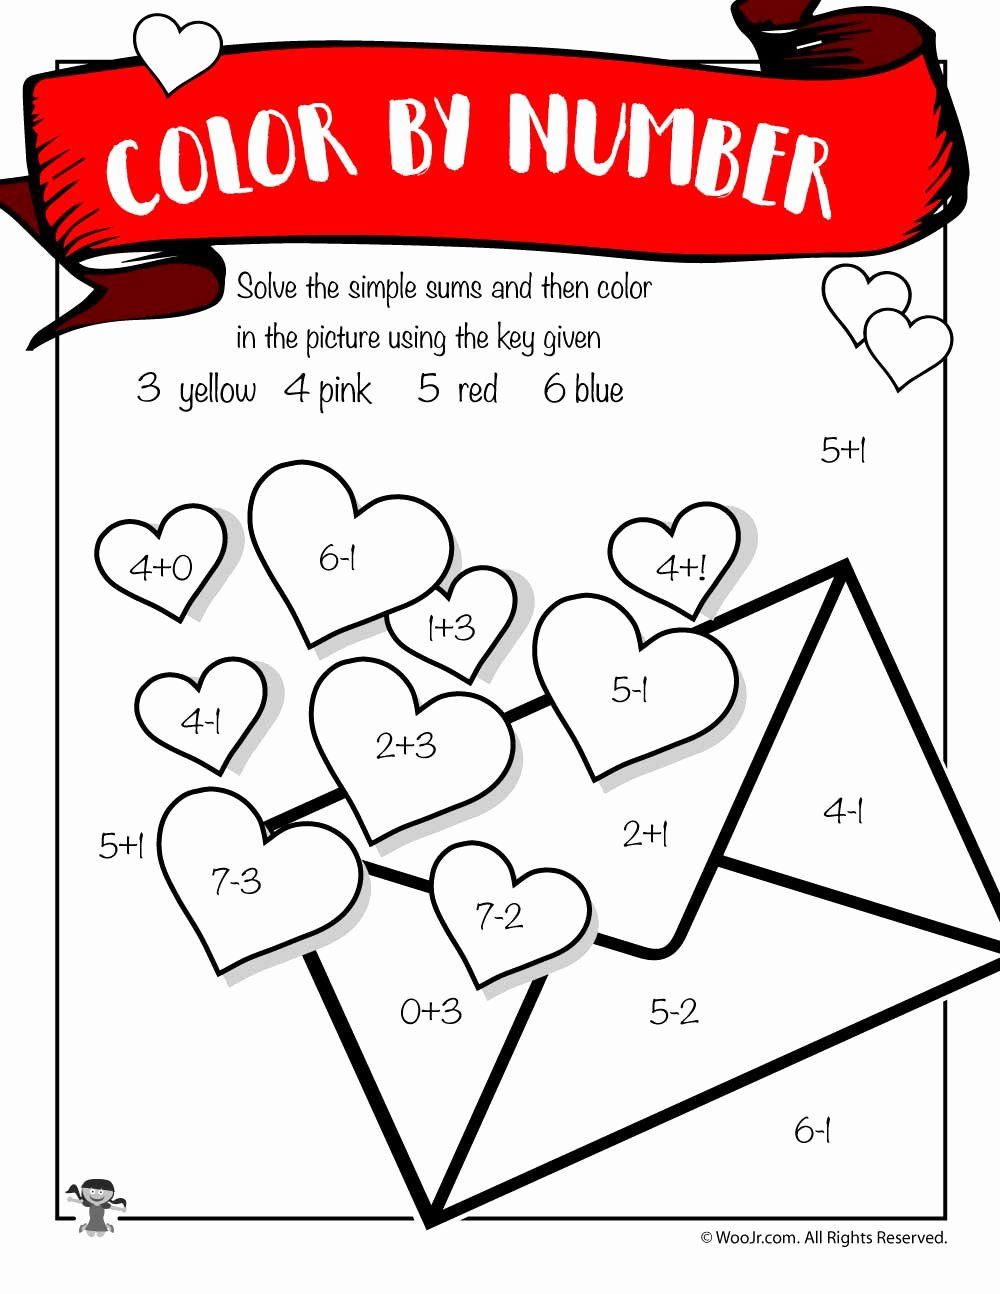 valentine-s-day-multiplication-worksheets-alphabetworksheetsfree